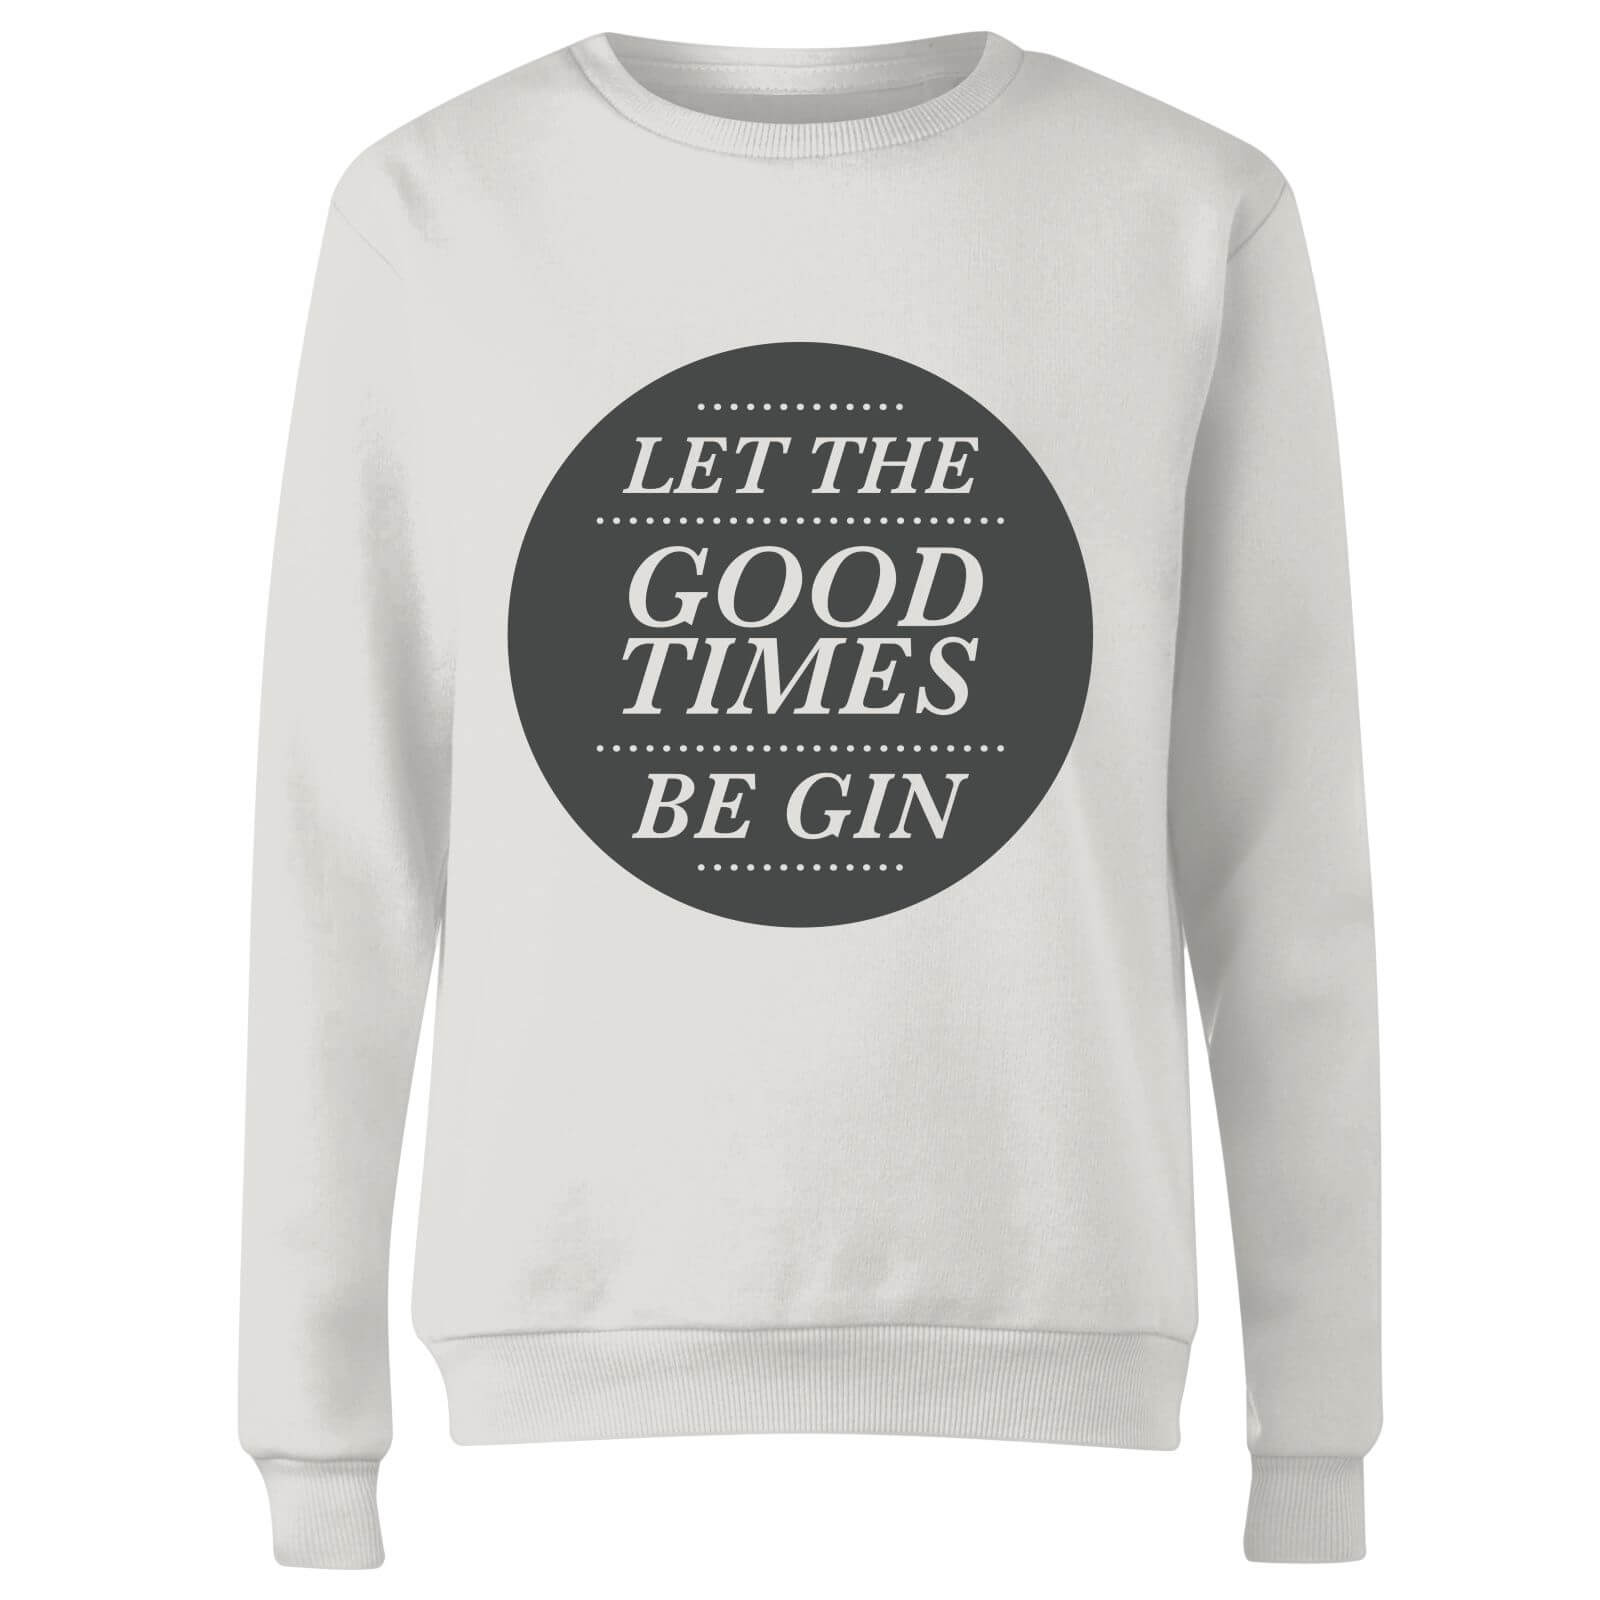 Let the Good Times Be Gin Women's Sweatshirt - White - S - White